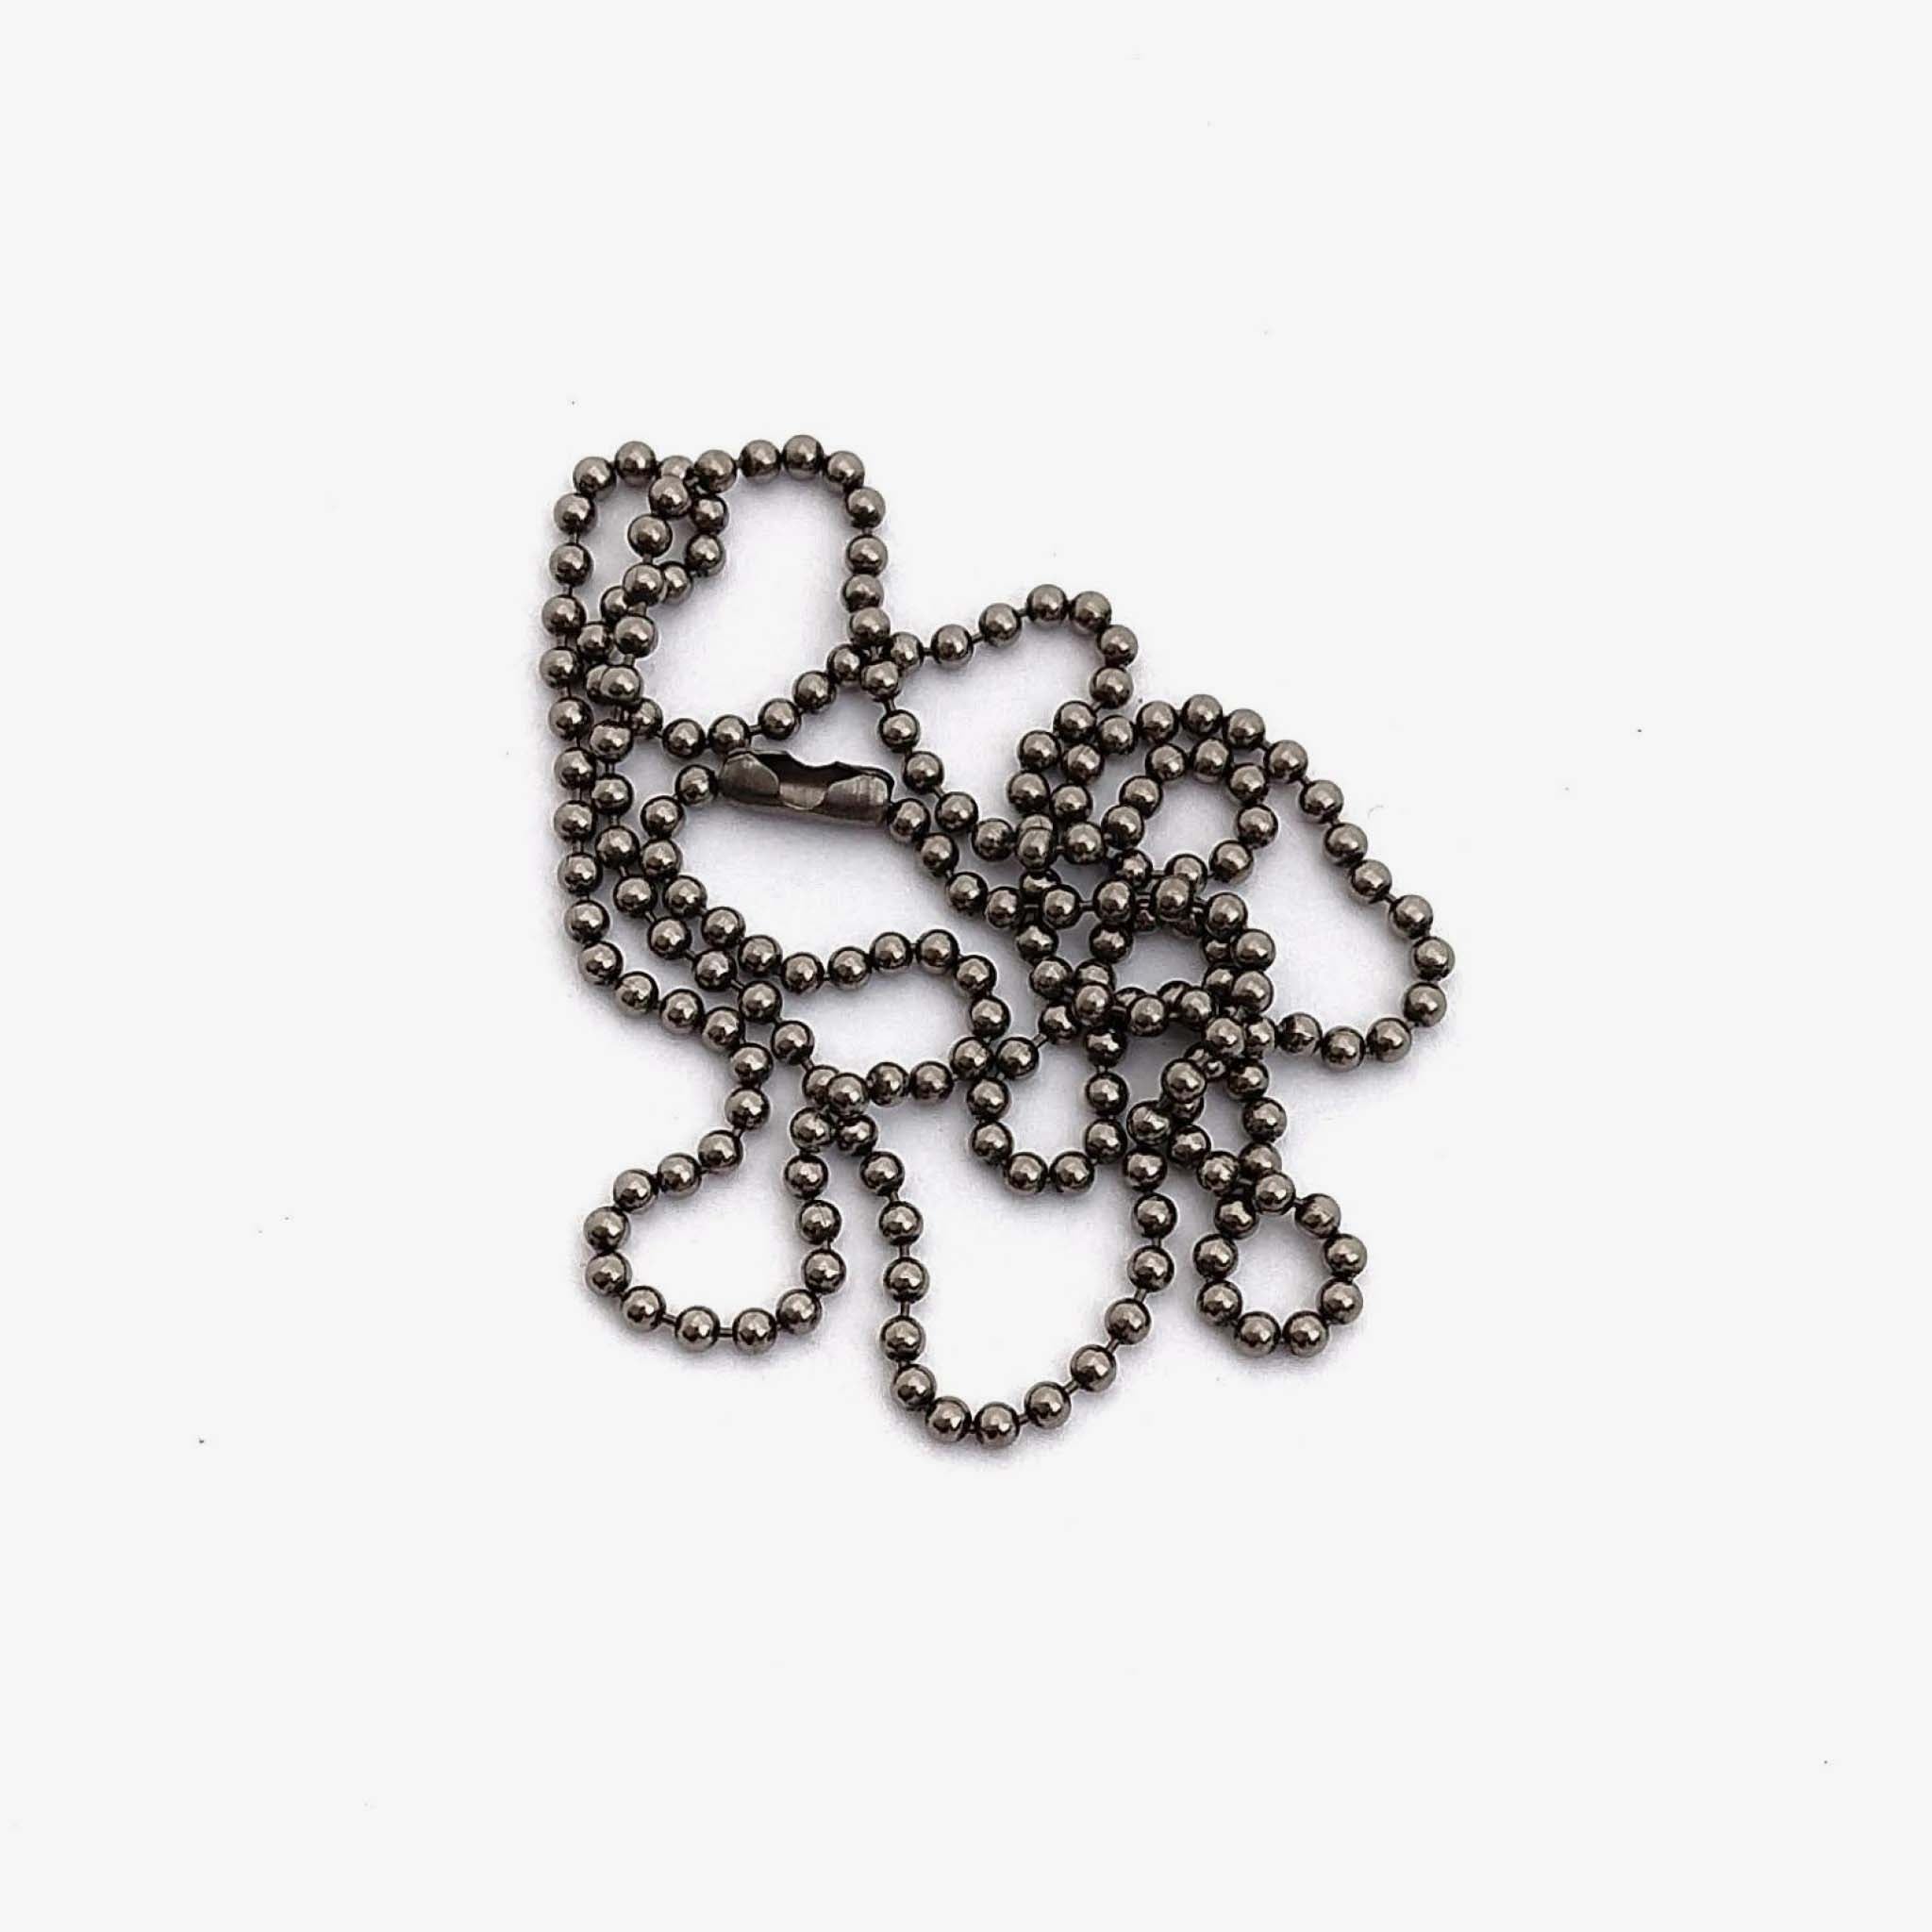 Titanium Ball Chain Necklace - Flytanium